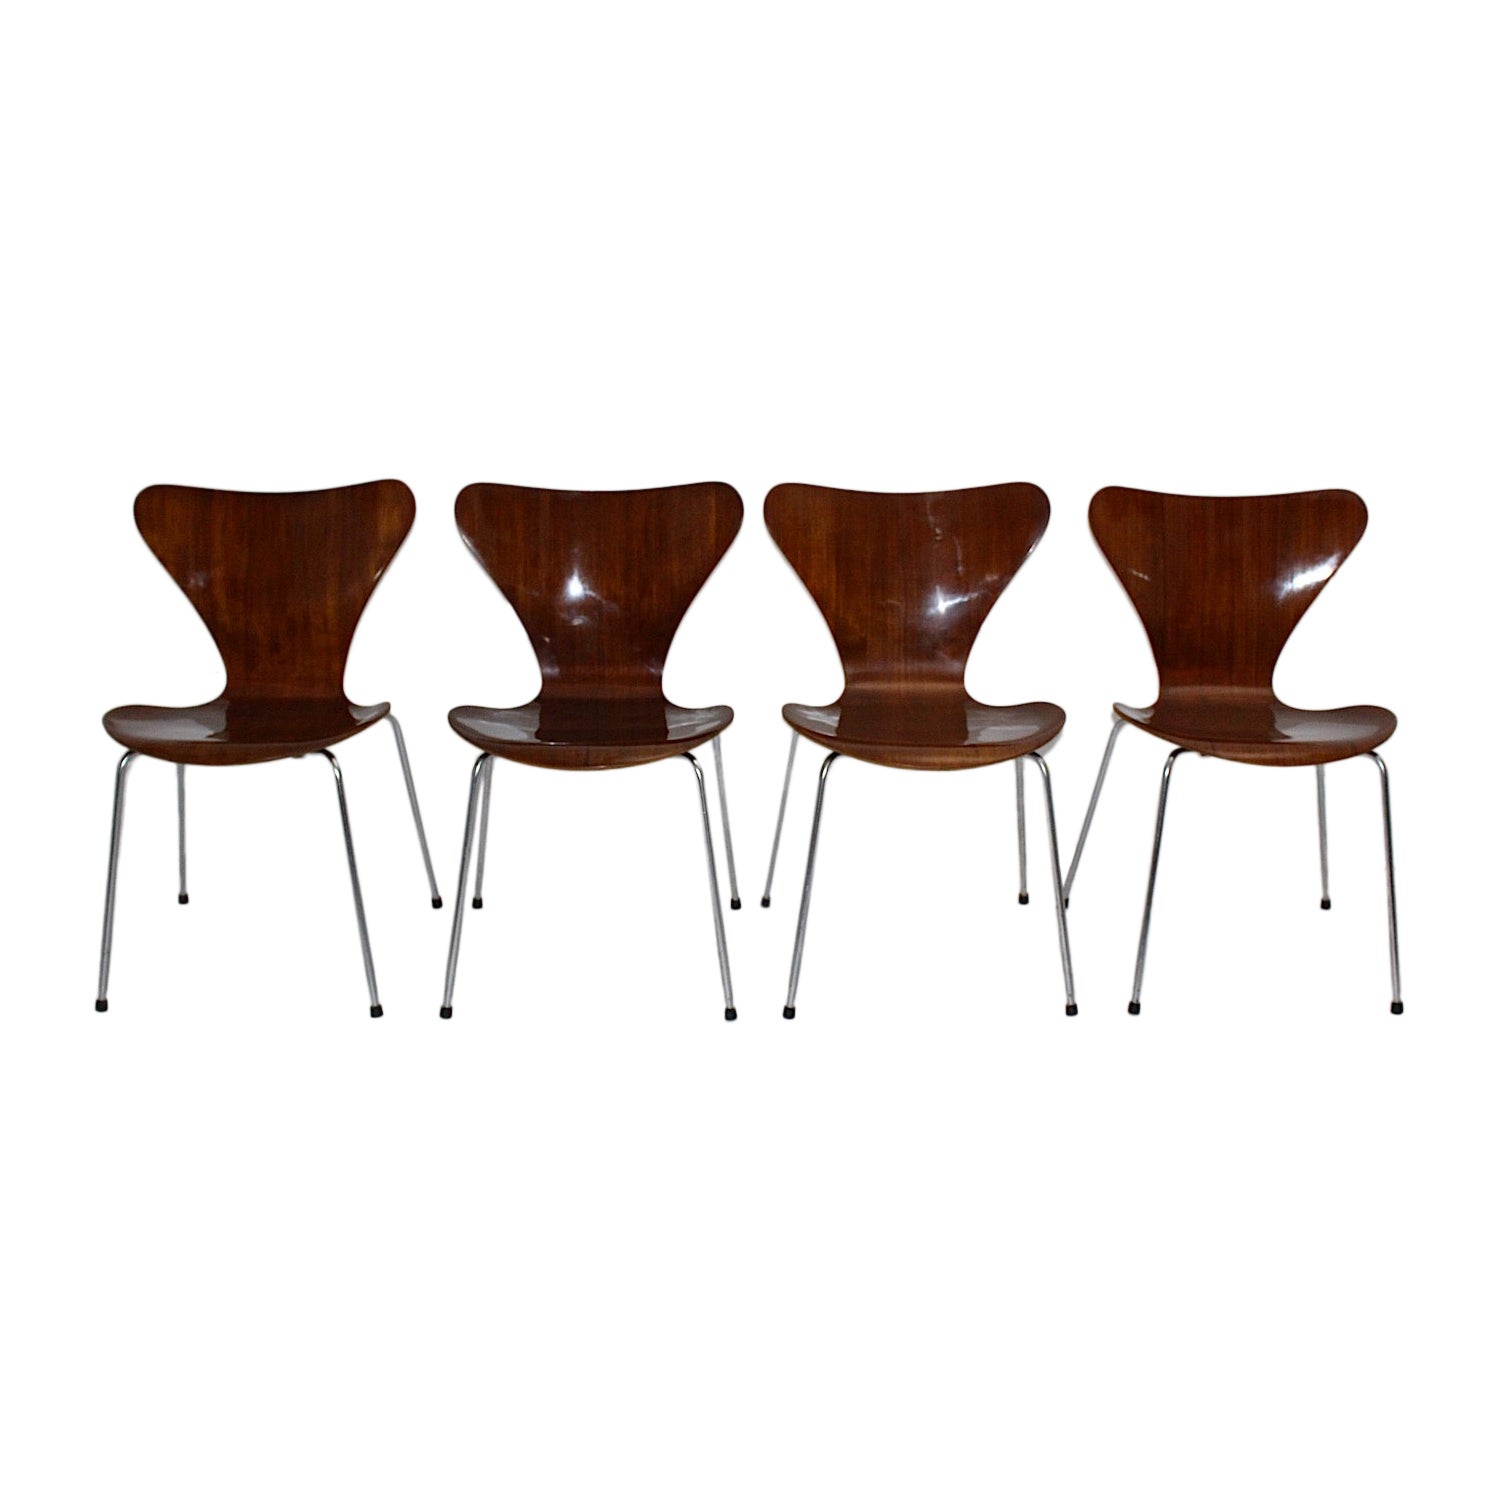 Modernist Vintage Brown Four Dining Chairs Arne Jacobsen 3107 circa 1955 Denmark